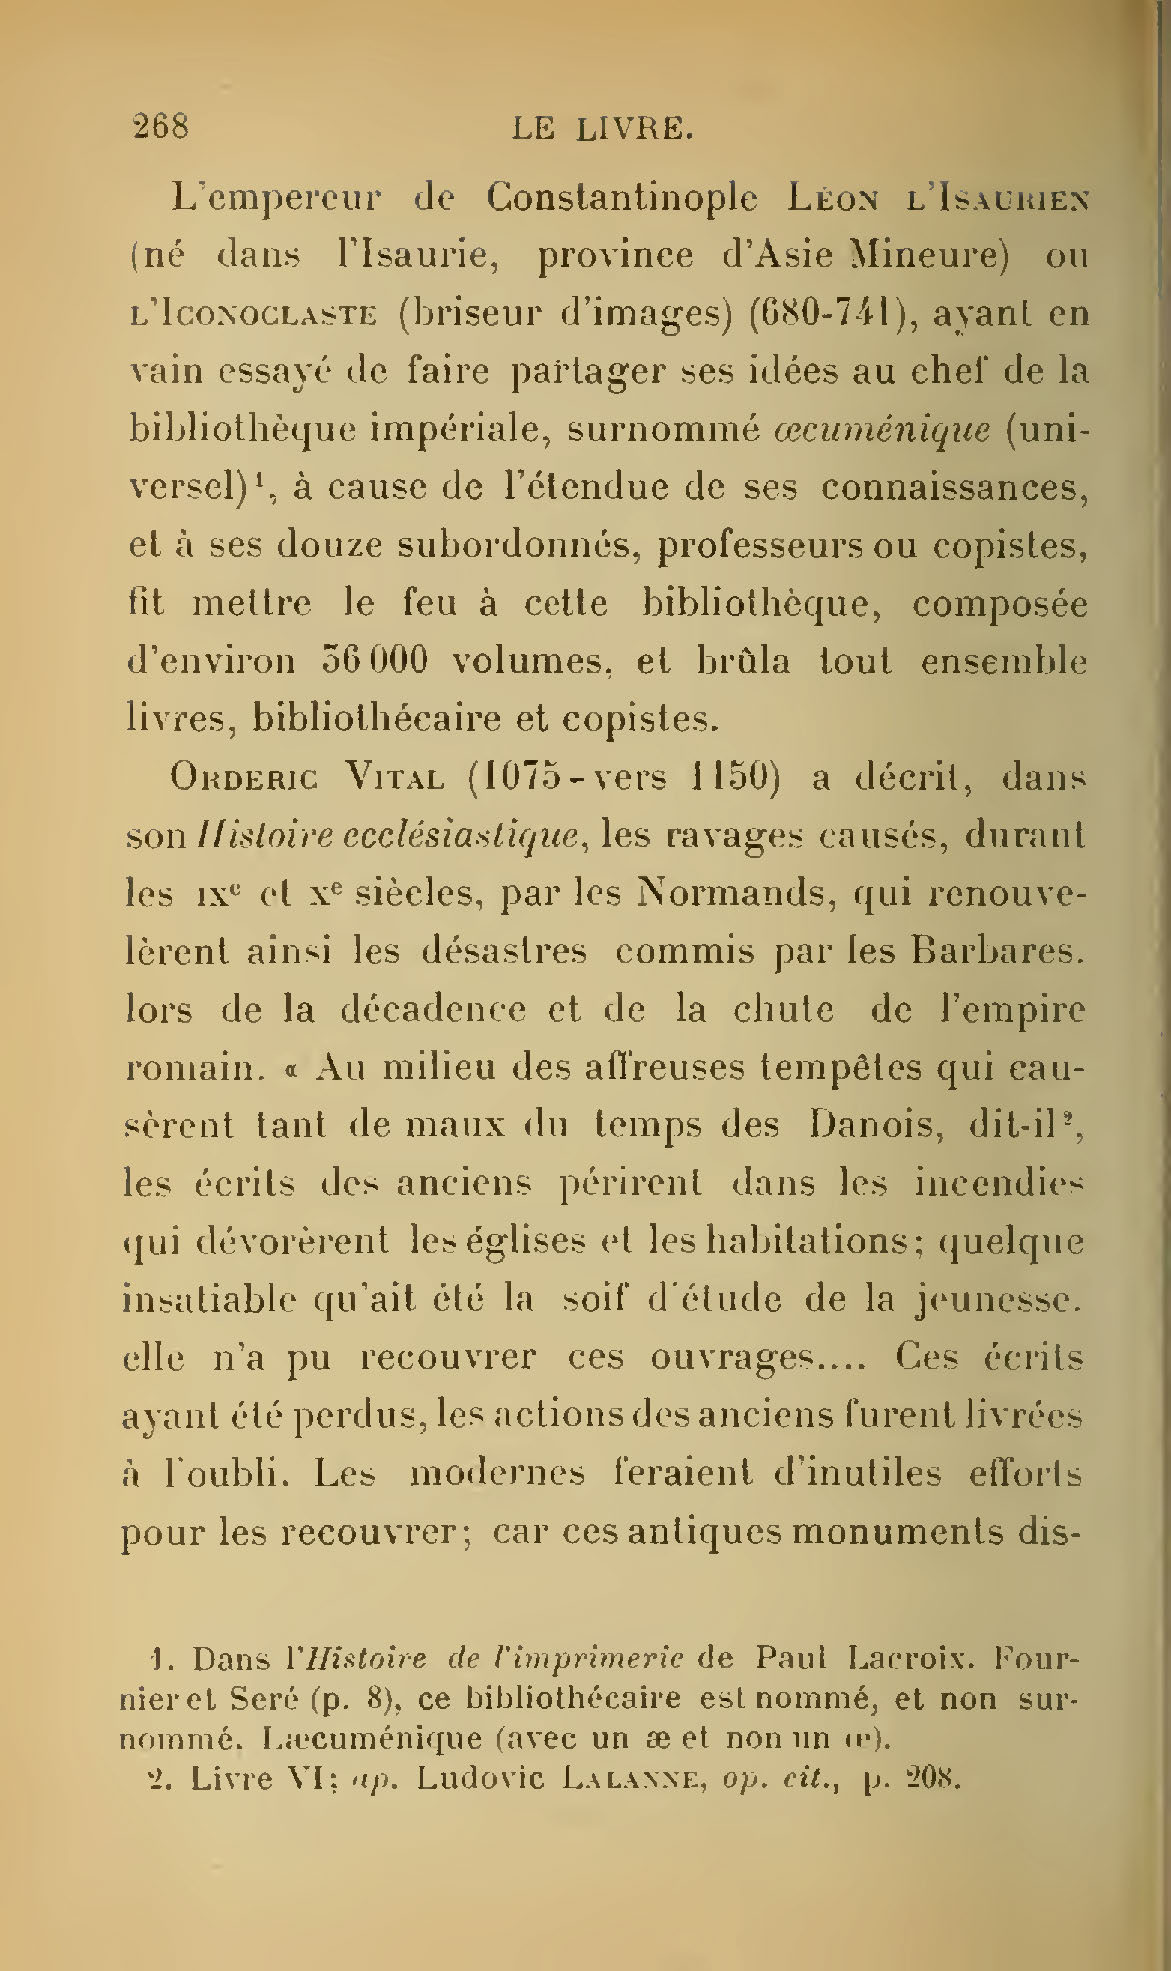 Albert Cim, Le Livre, t. II, p. 268.